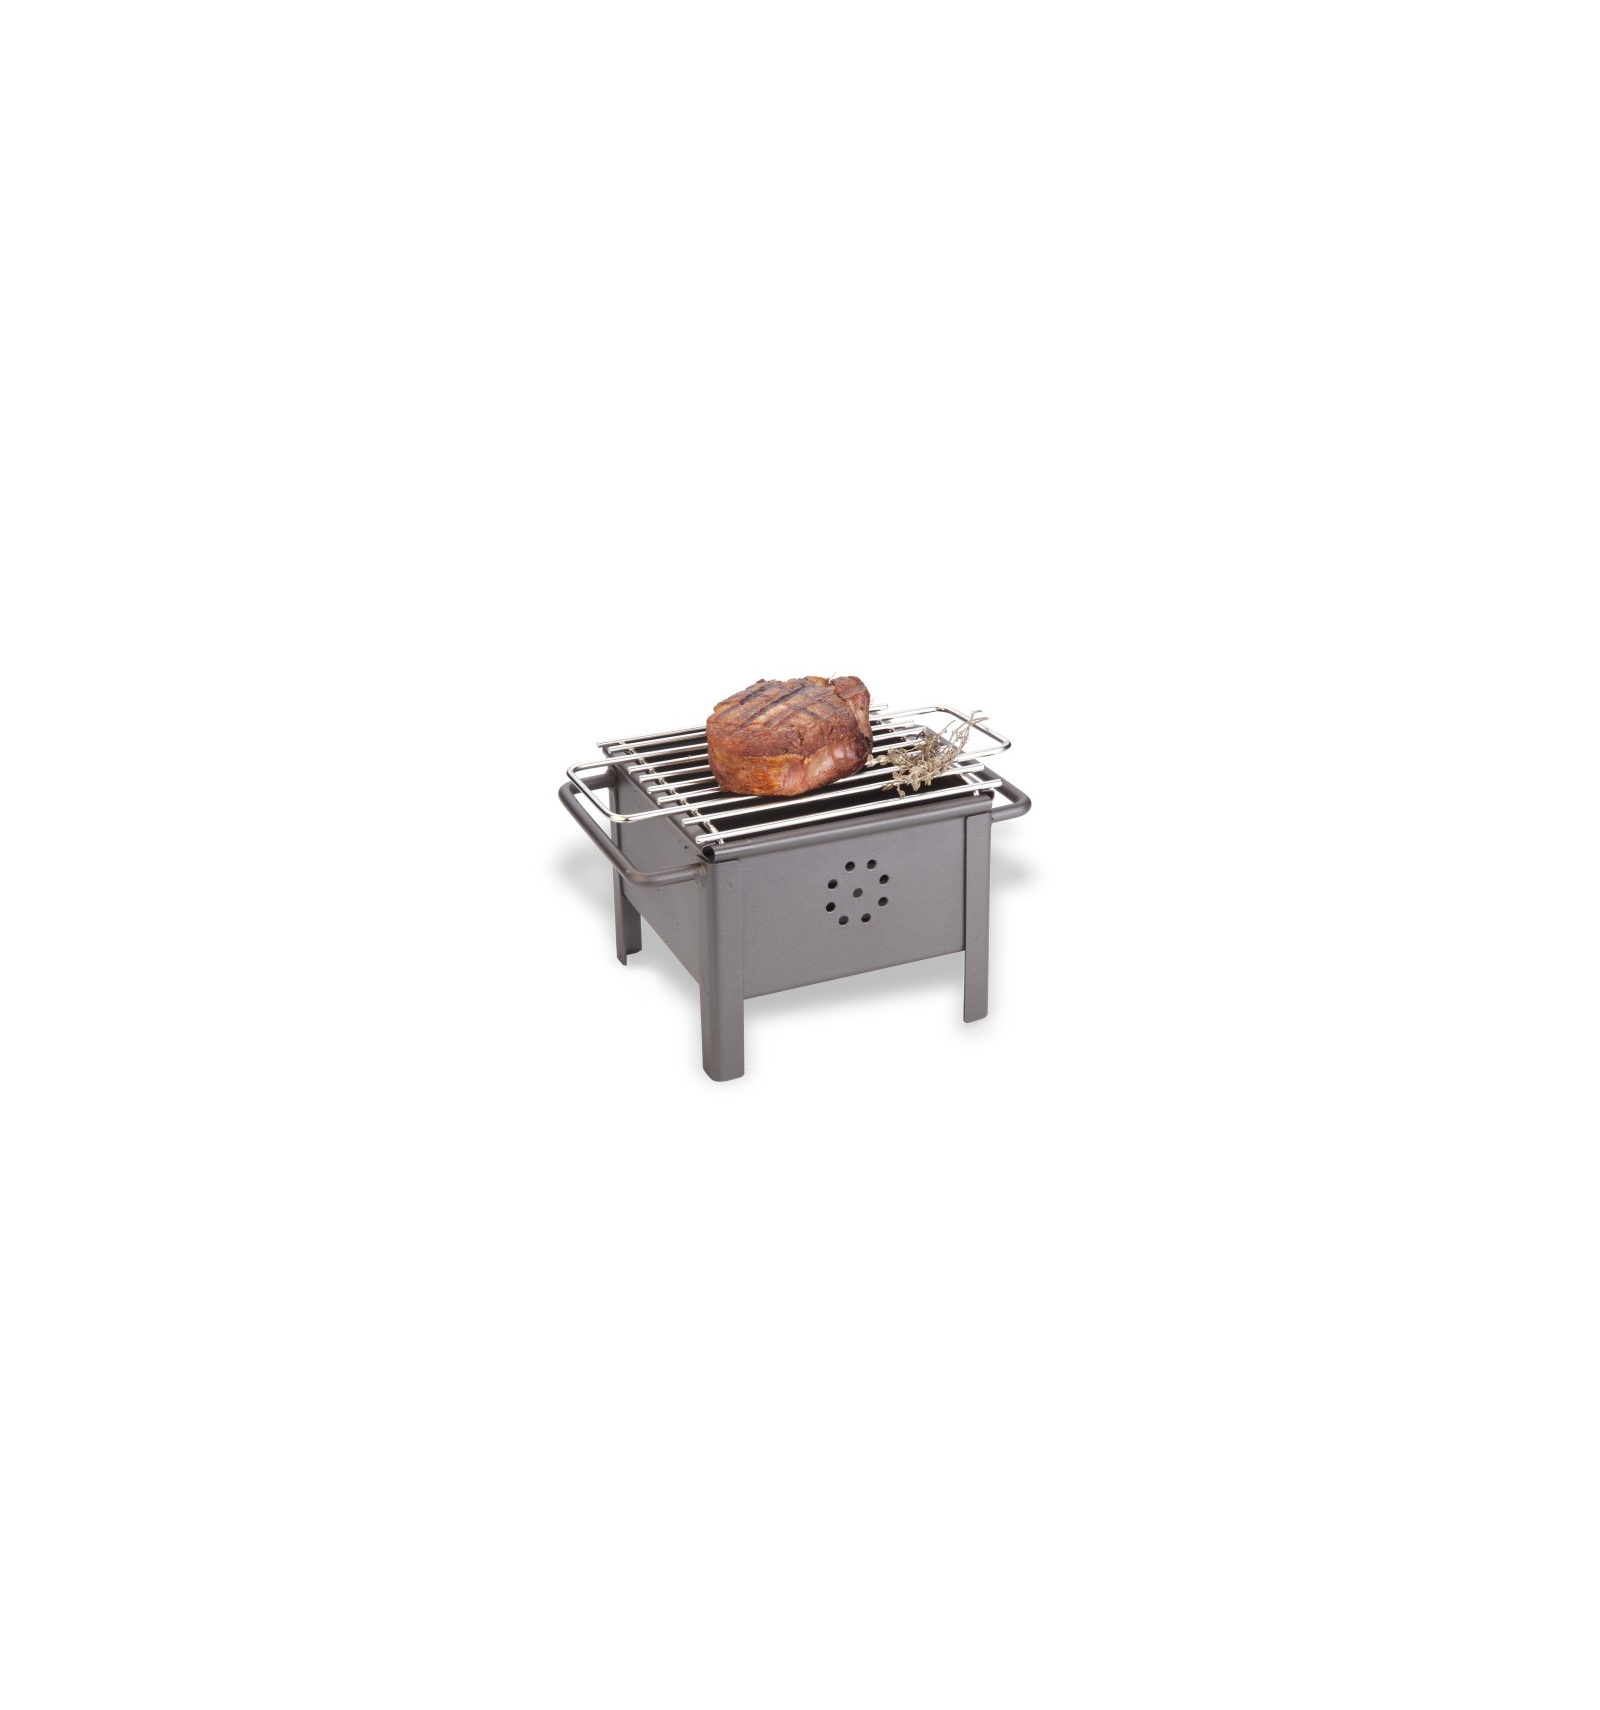 Mini barbacoa de sobremesa de acero inoxidable con cajón para cenizas  Omega. Dimensiones: 15 x 15